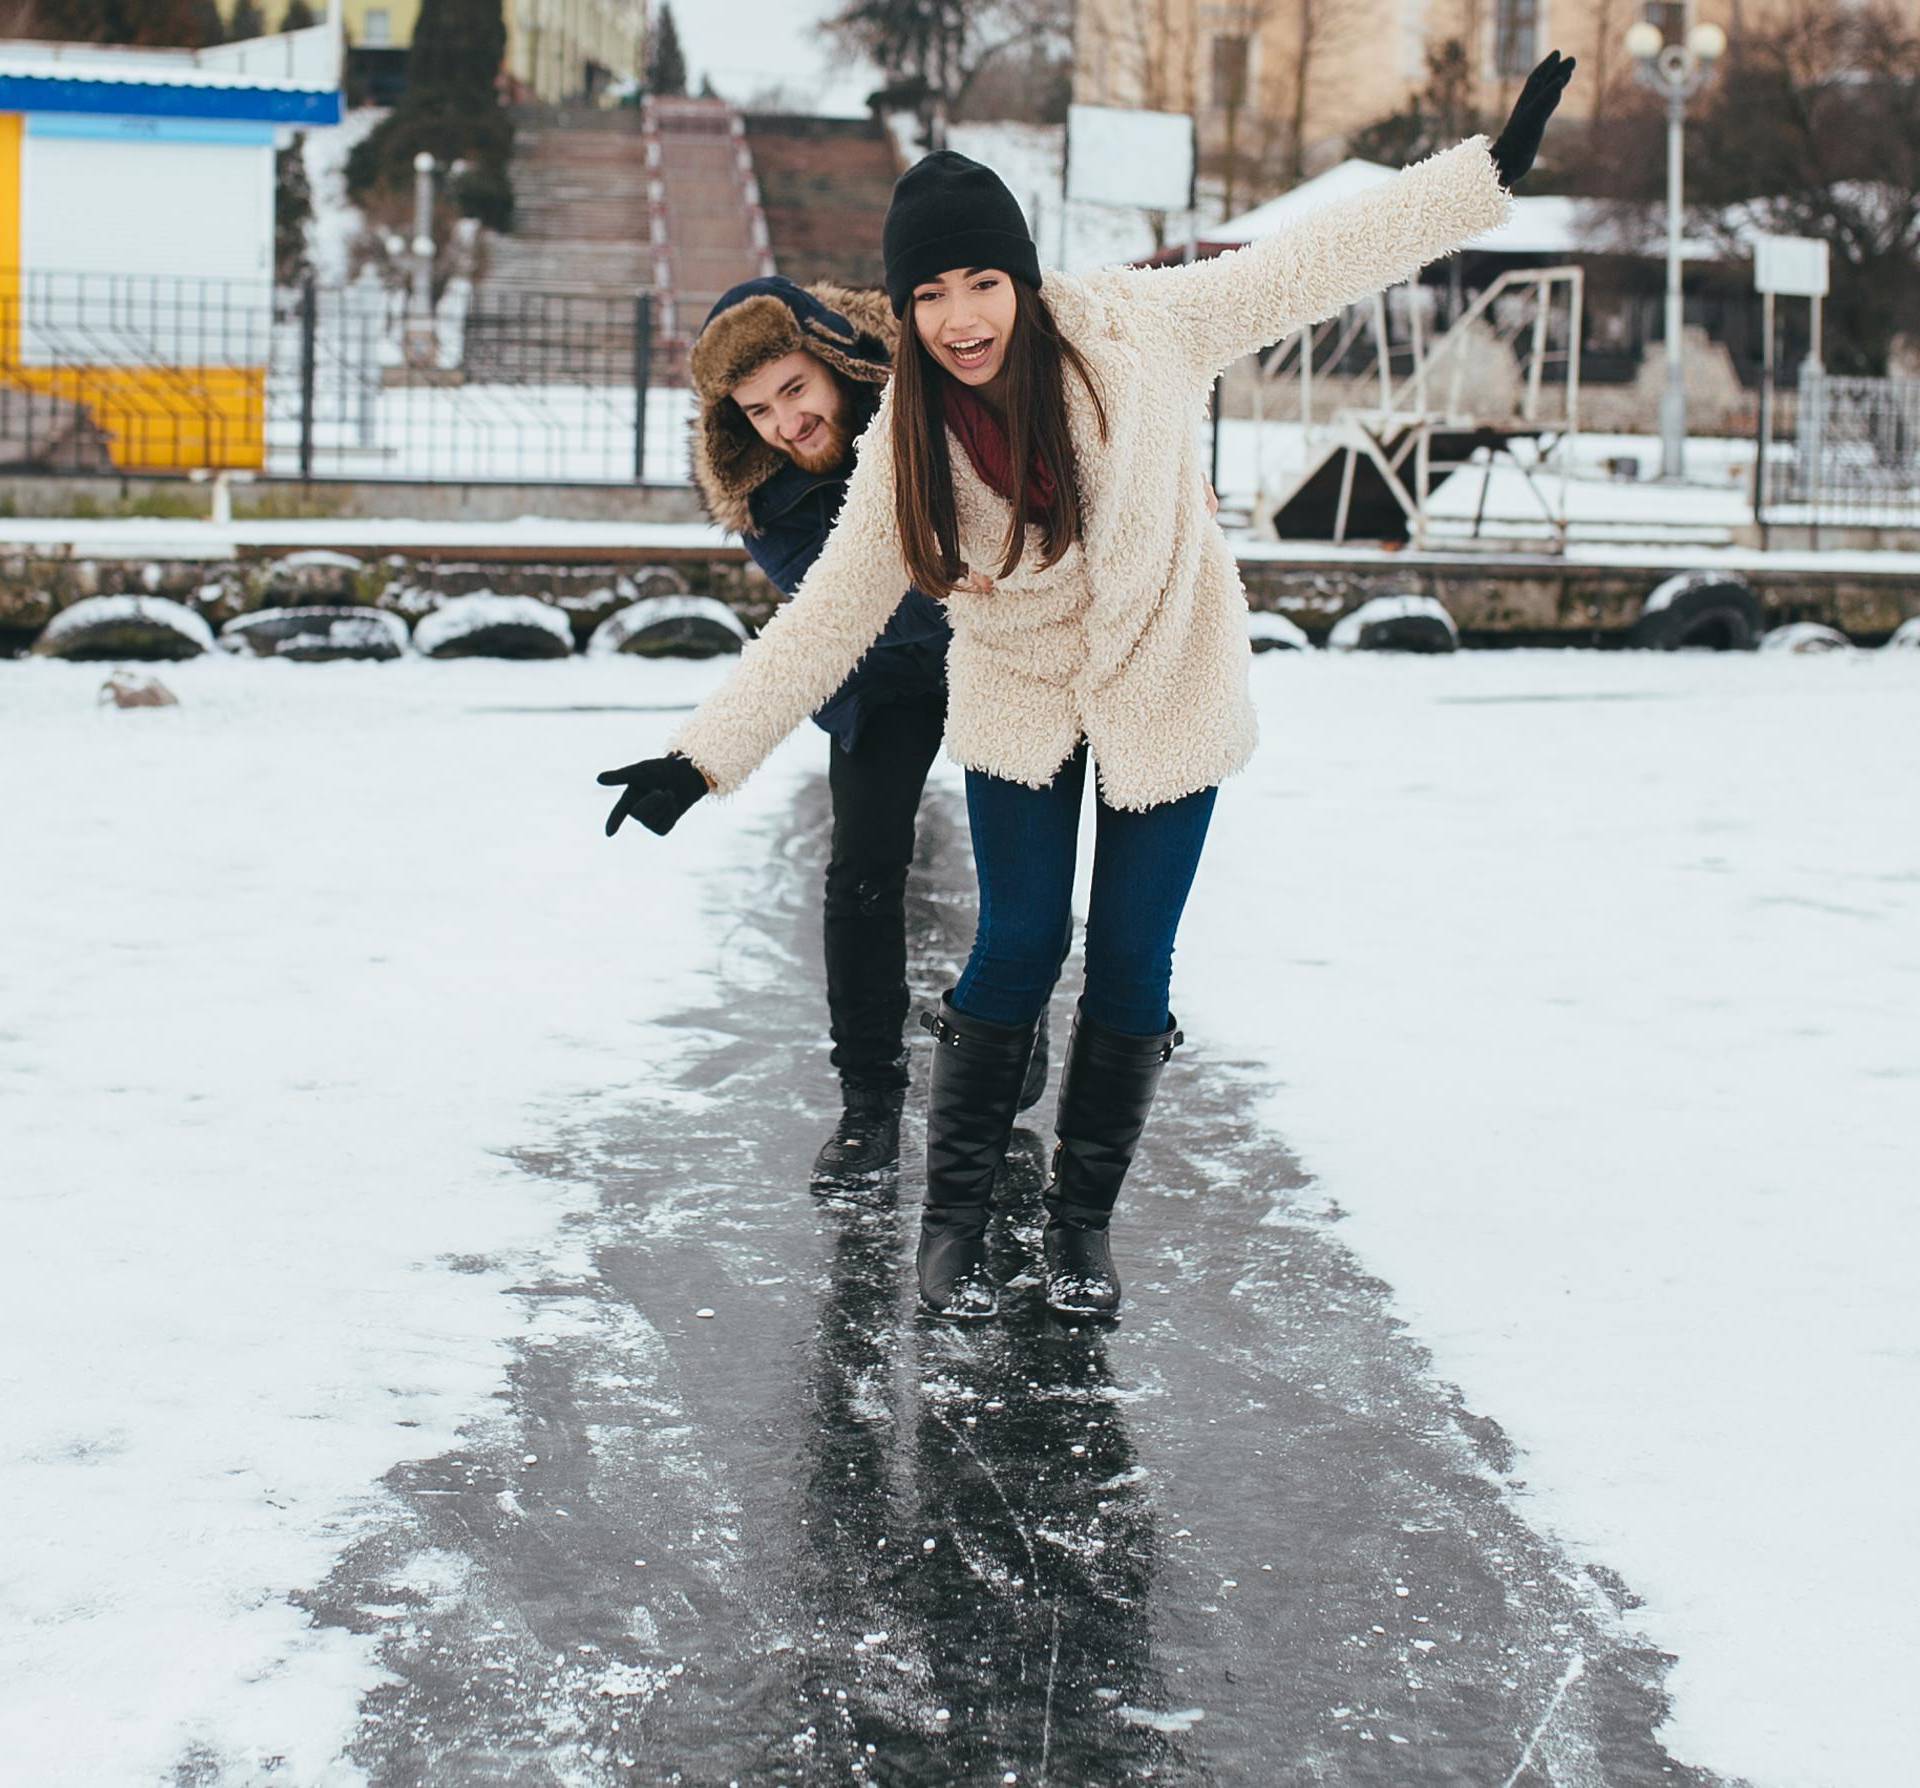 Evo kako hodati po ledu, a pri tom izbjeći rizik od pada i loma